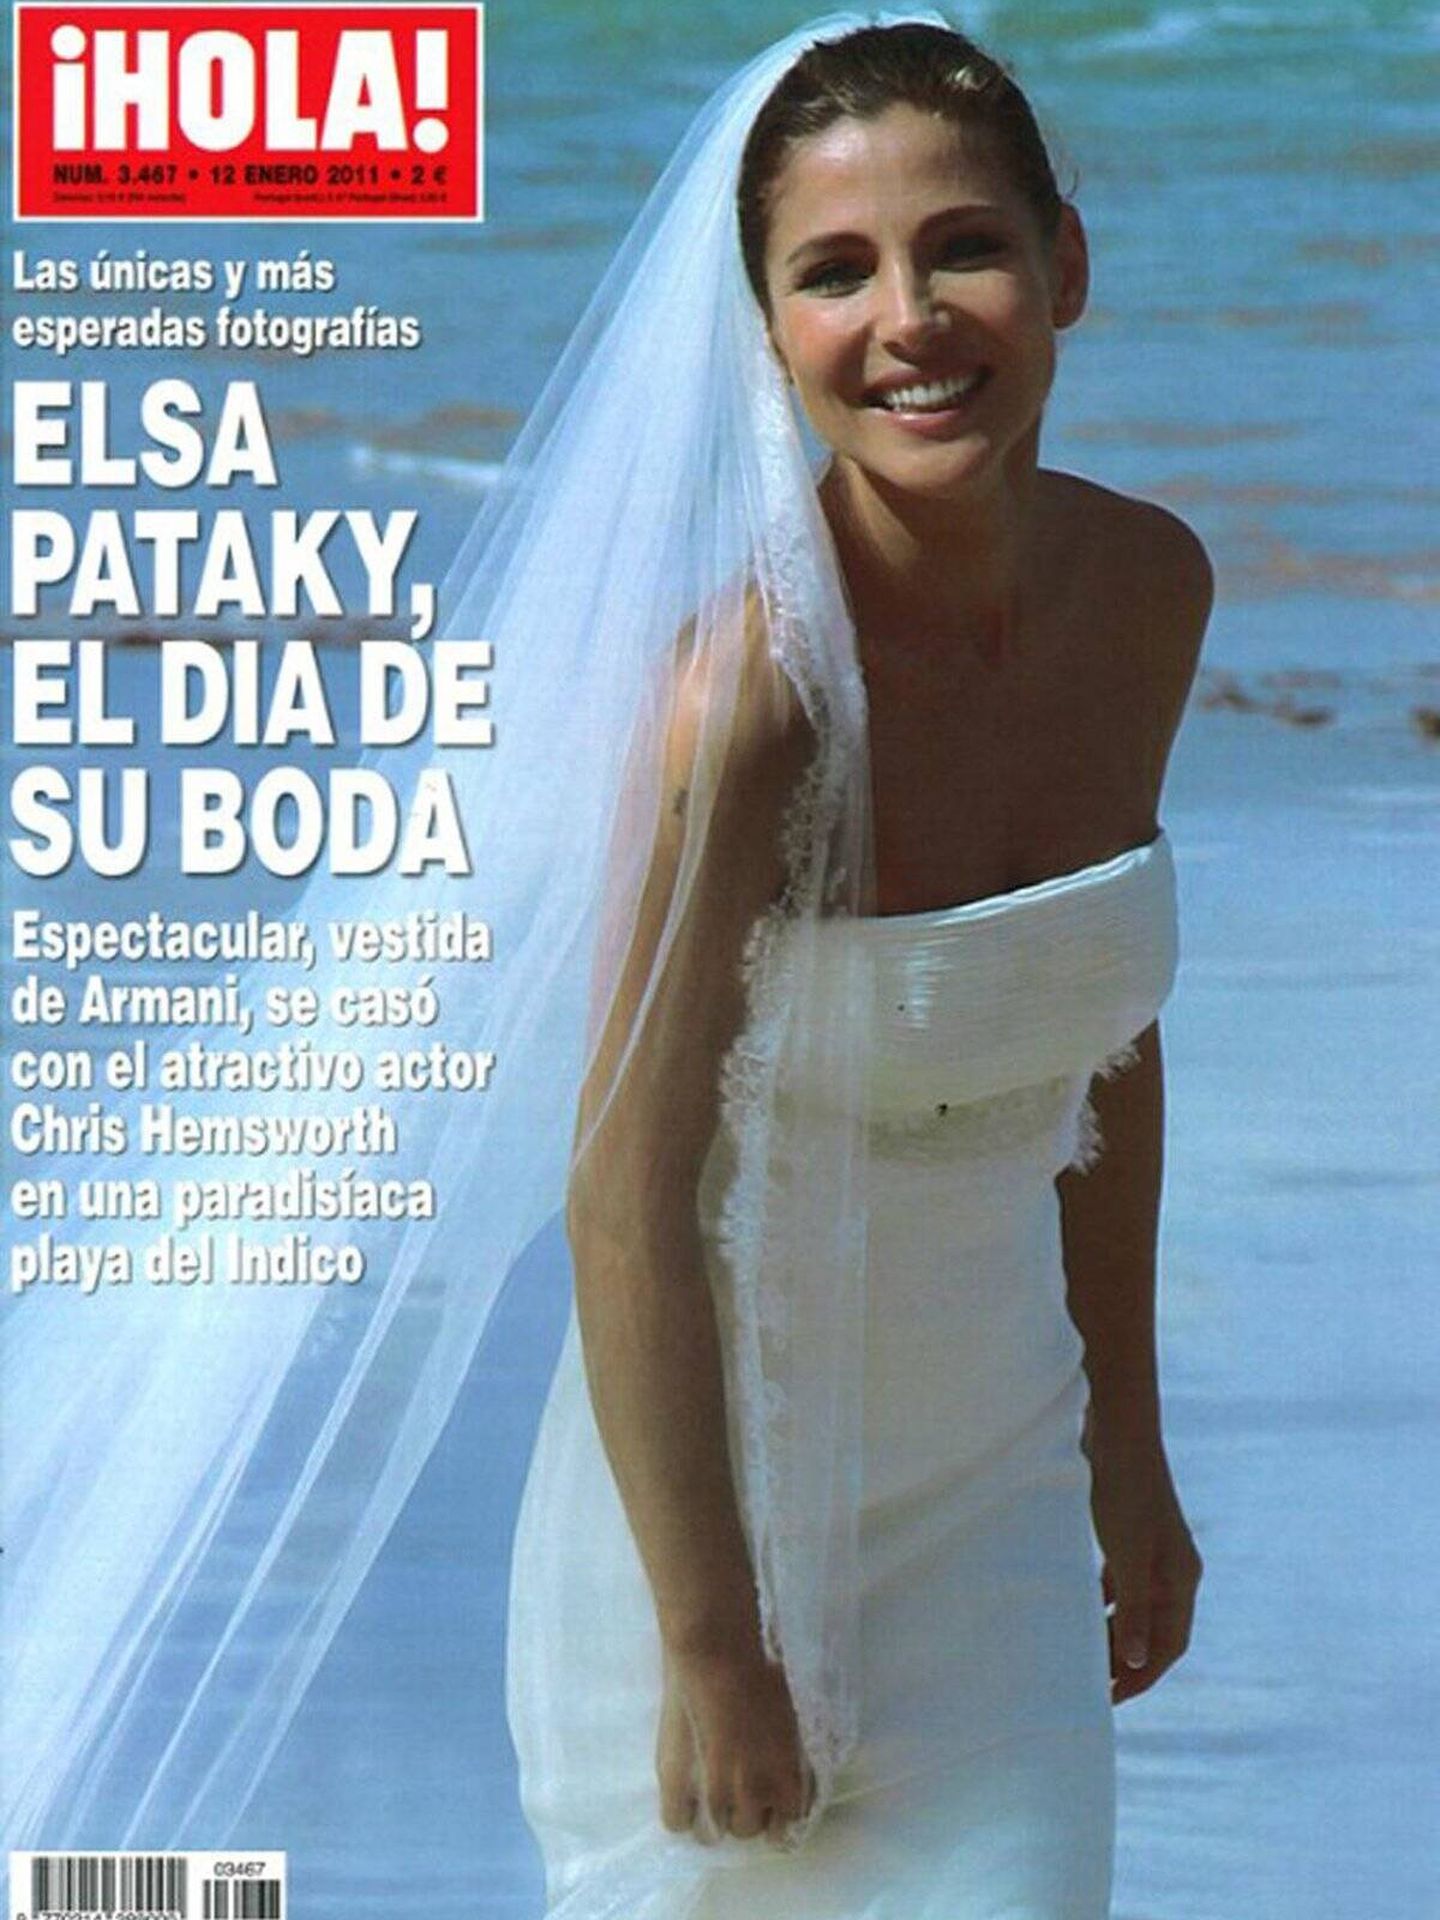 La portada de '¡Hola!' con Elsa Pataky de novia. ('¡Hola!')